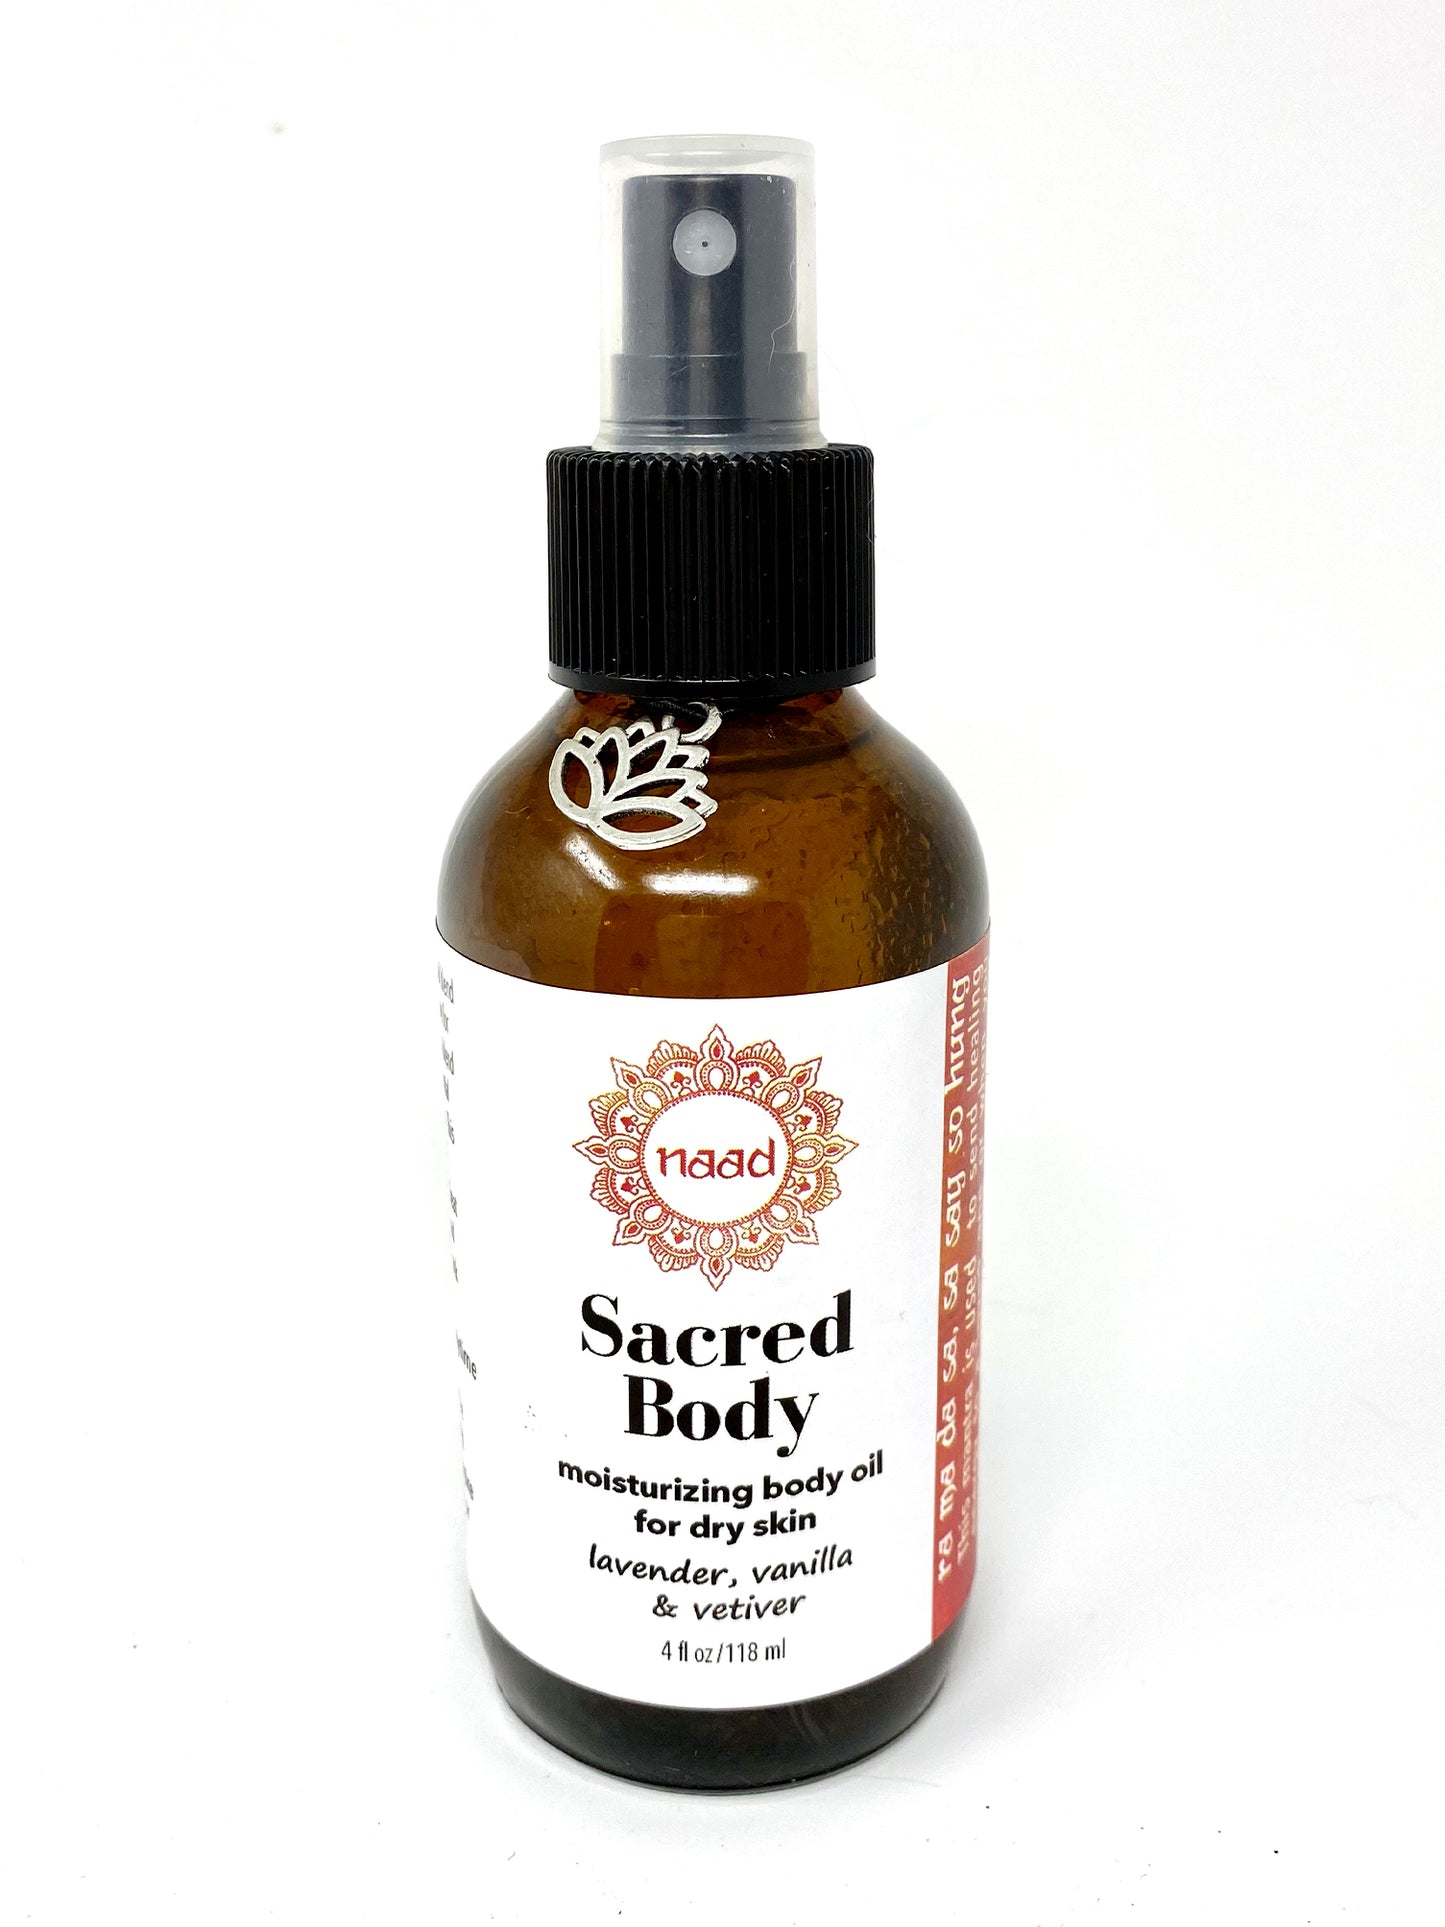 Sacred Body Moisturizing Oil: Vanilla, Vetiver and Lavender Essential Oils.